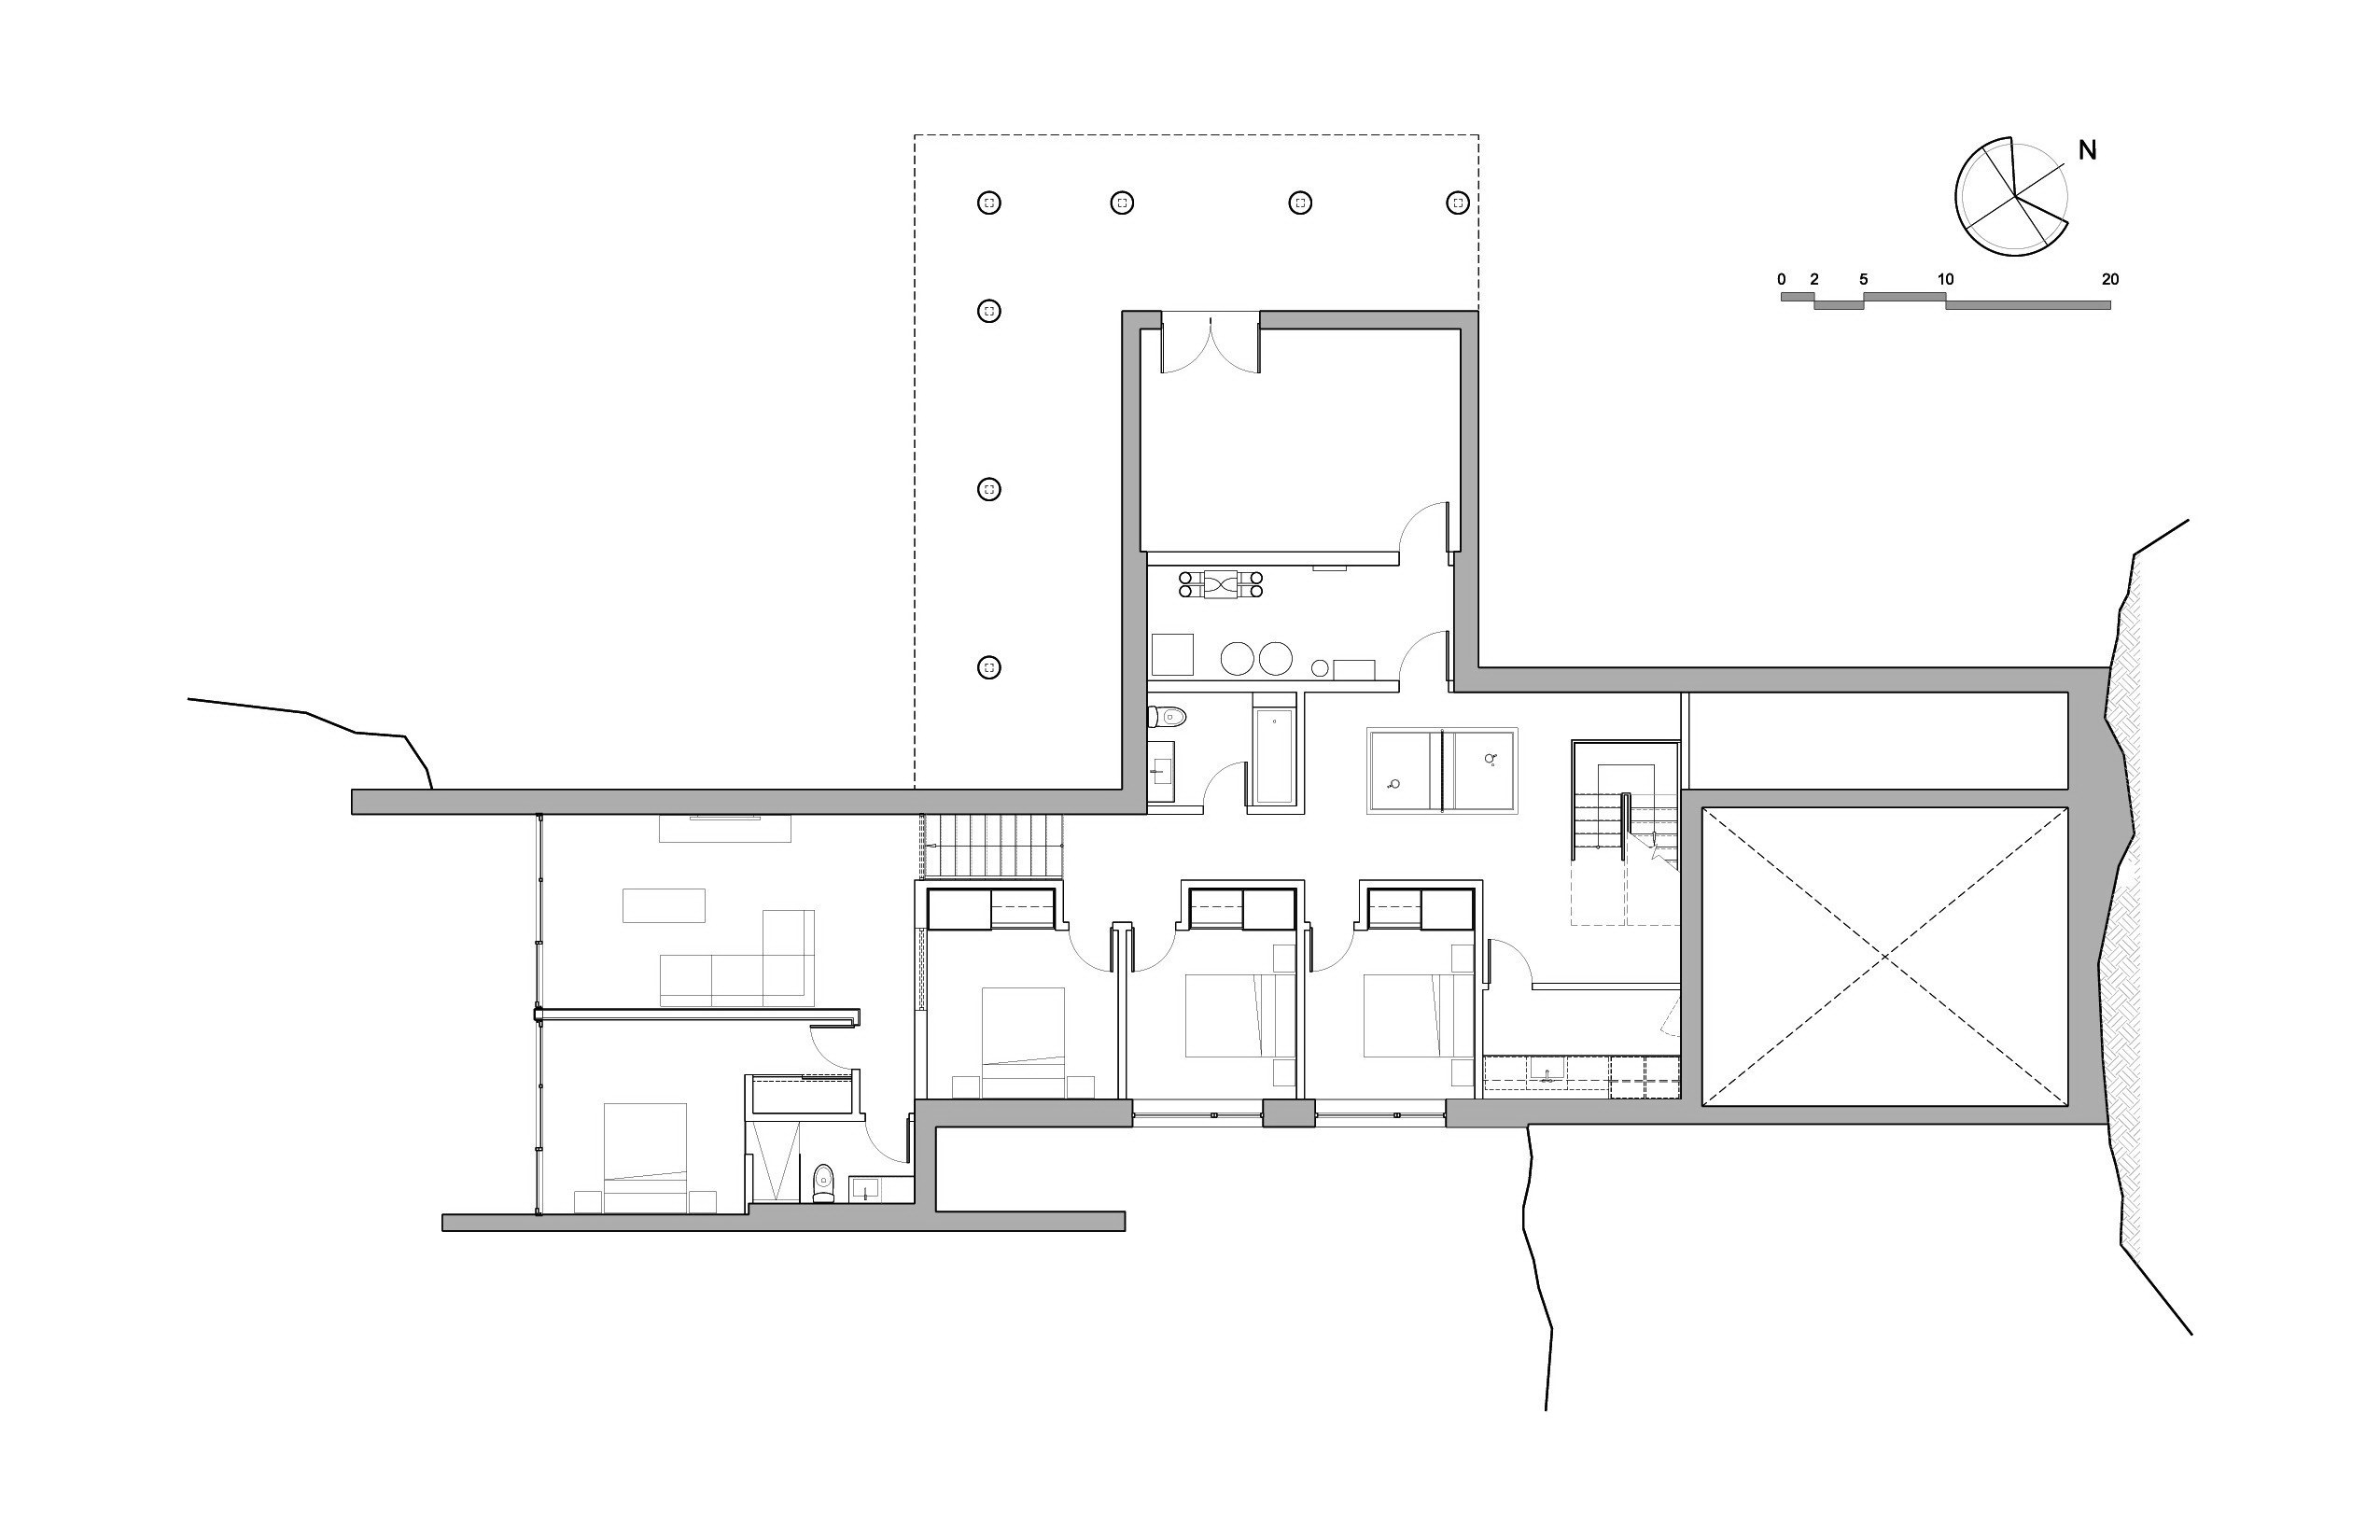 Estrade Residence | Lake House by MU Architecture